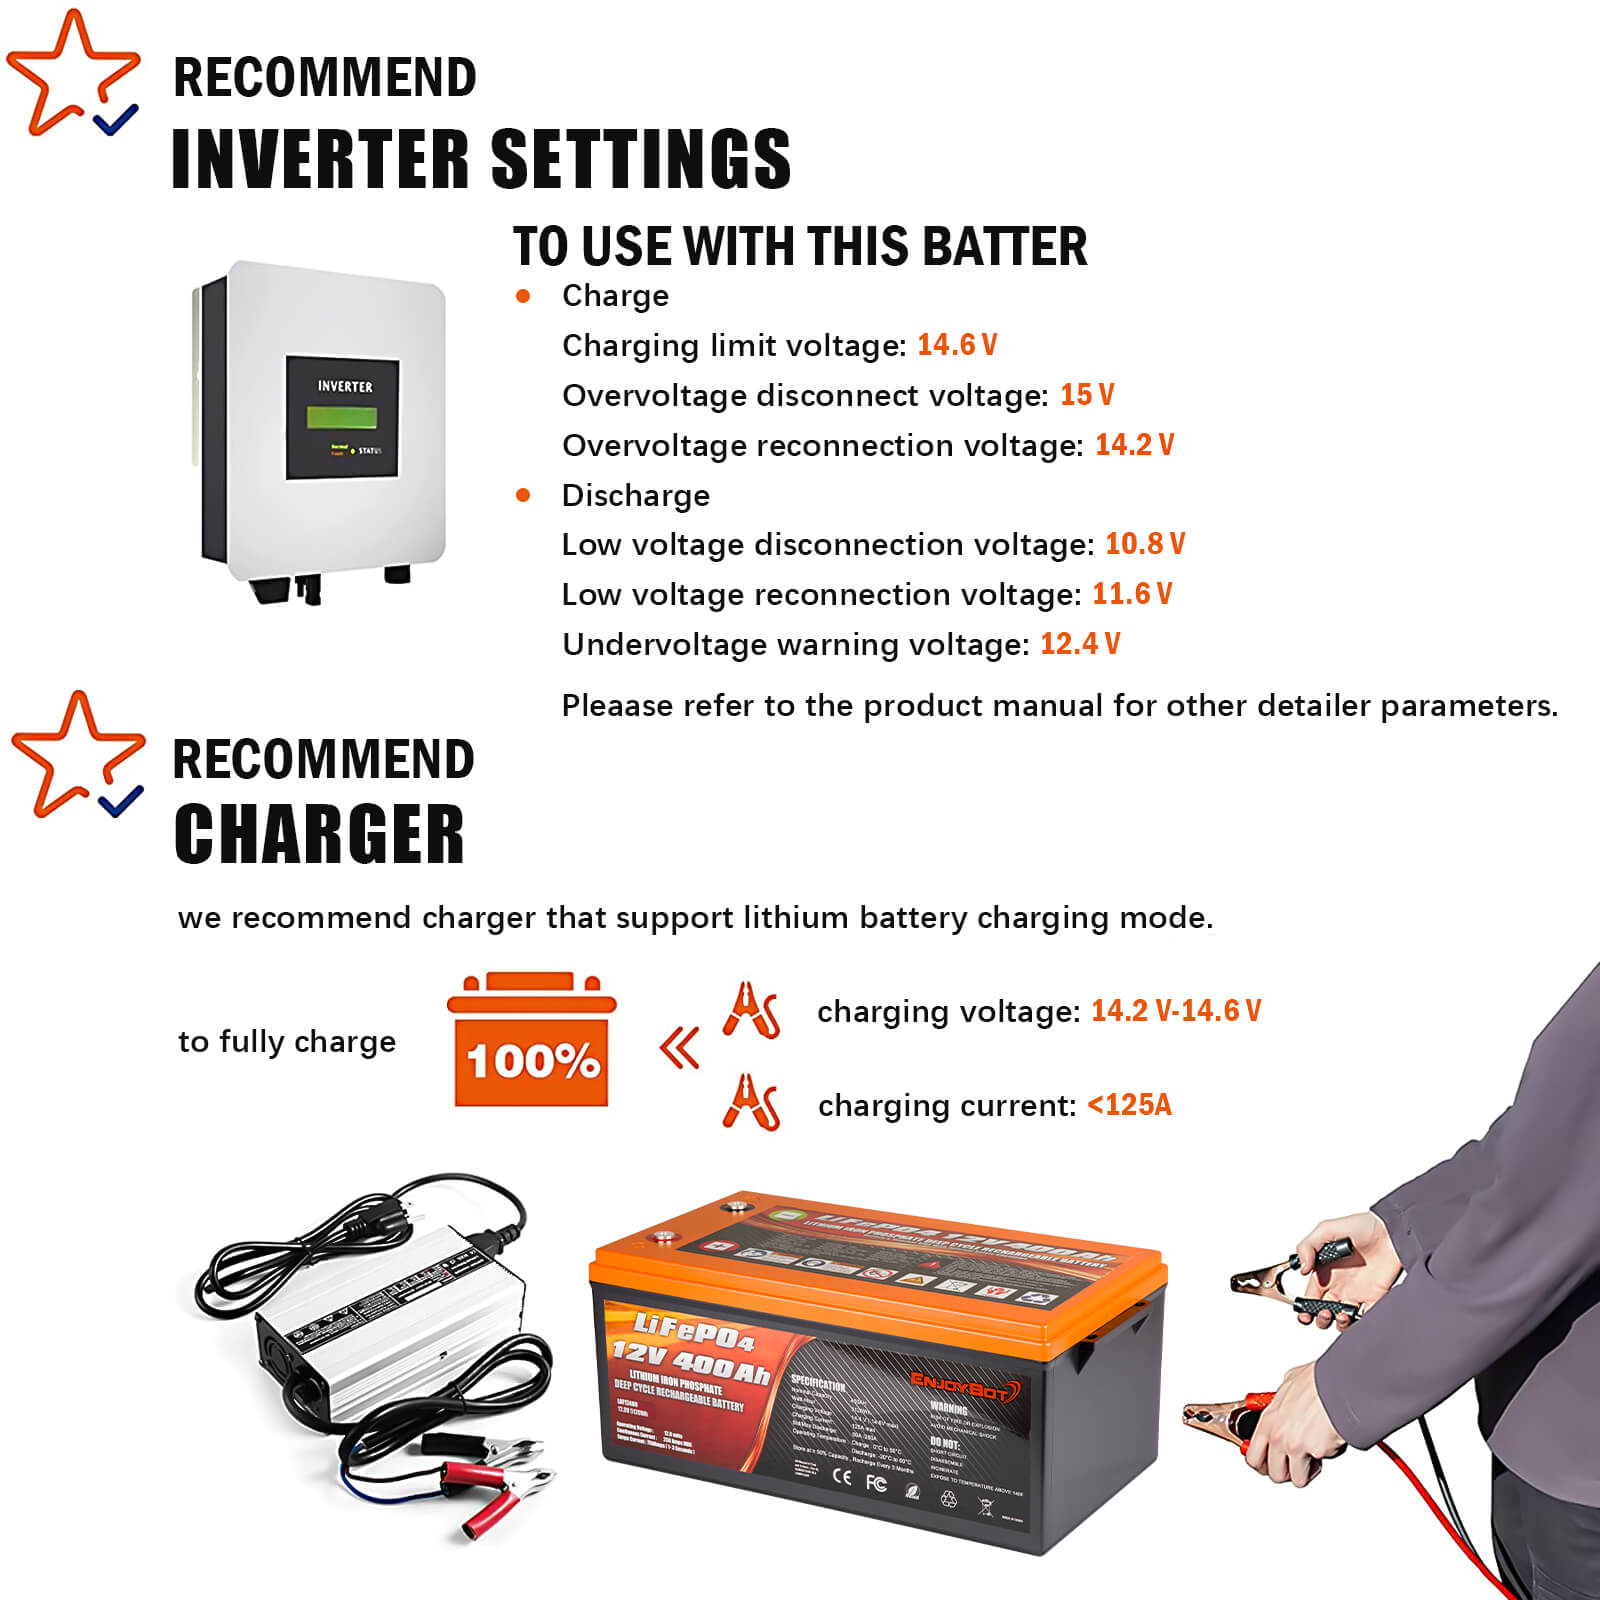 Enjoybot 12v 400ah LiFePO4 Battery - Inverter Setting